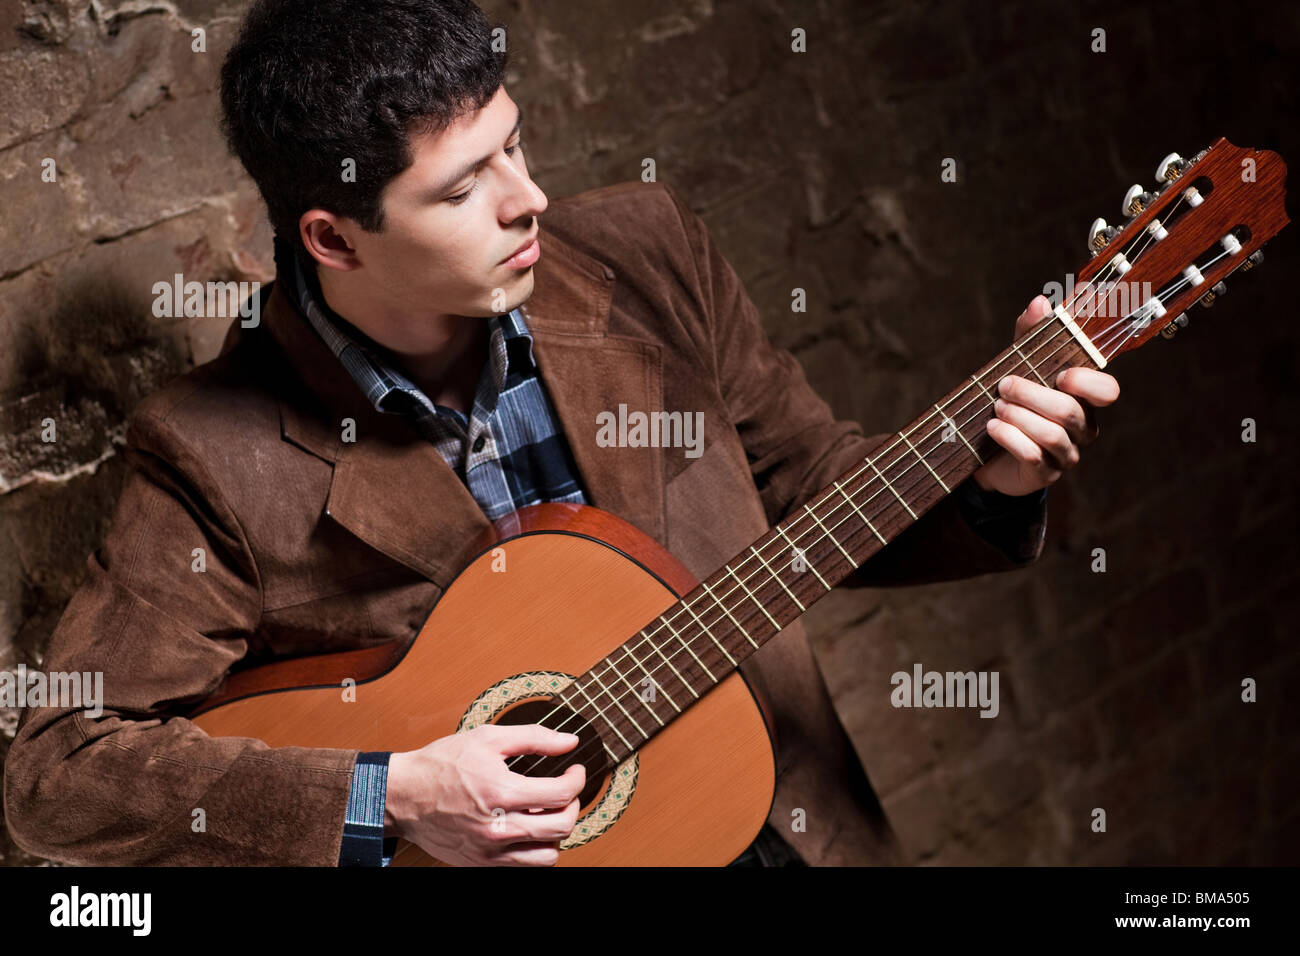 Junger Mann an der Gitarre zu spielen. Kamera-Winkel-Ansicht. Stockfoto